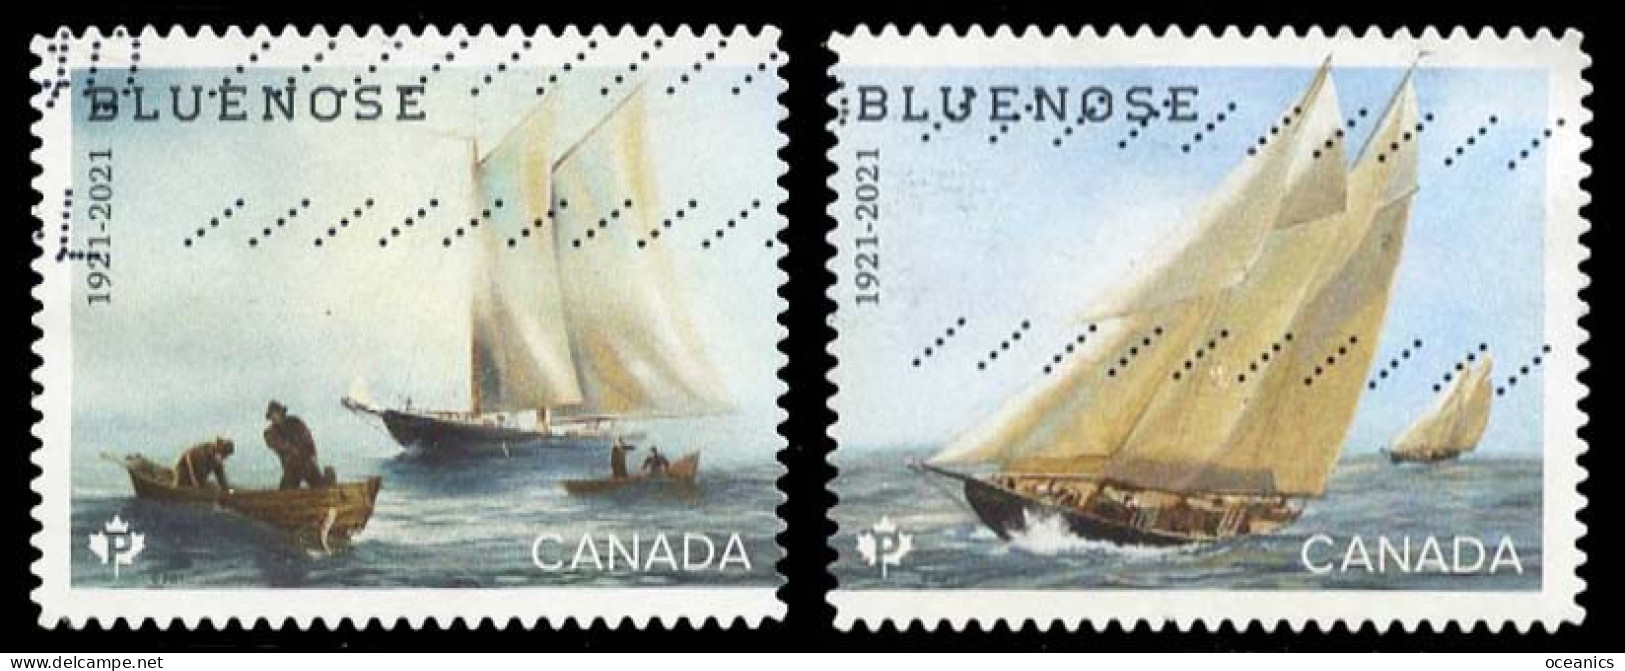 Canada (Scott No.3295 - Bluenose) (o) Pair - Used Stamps